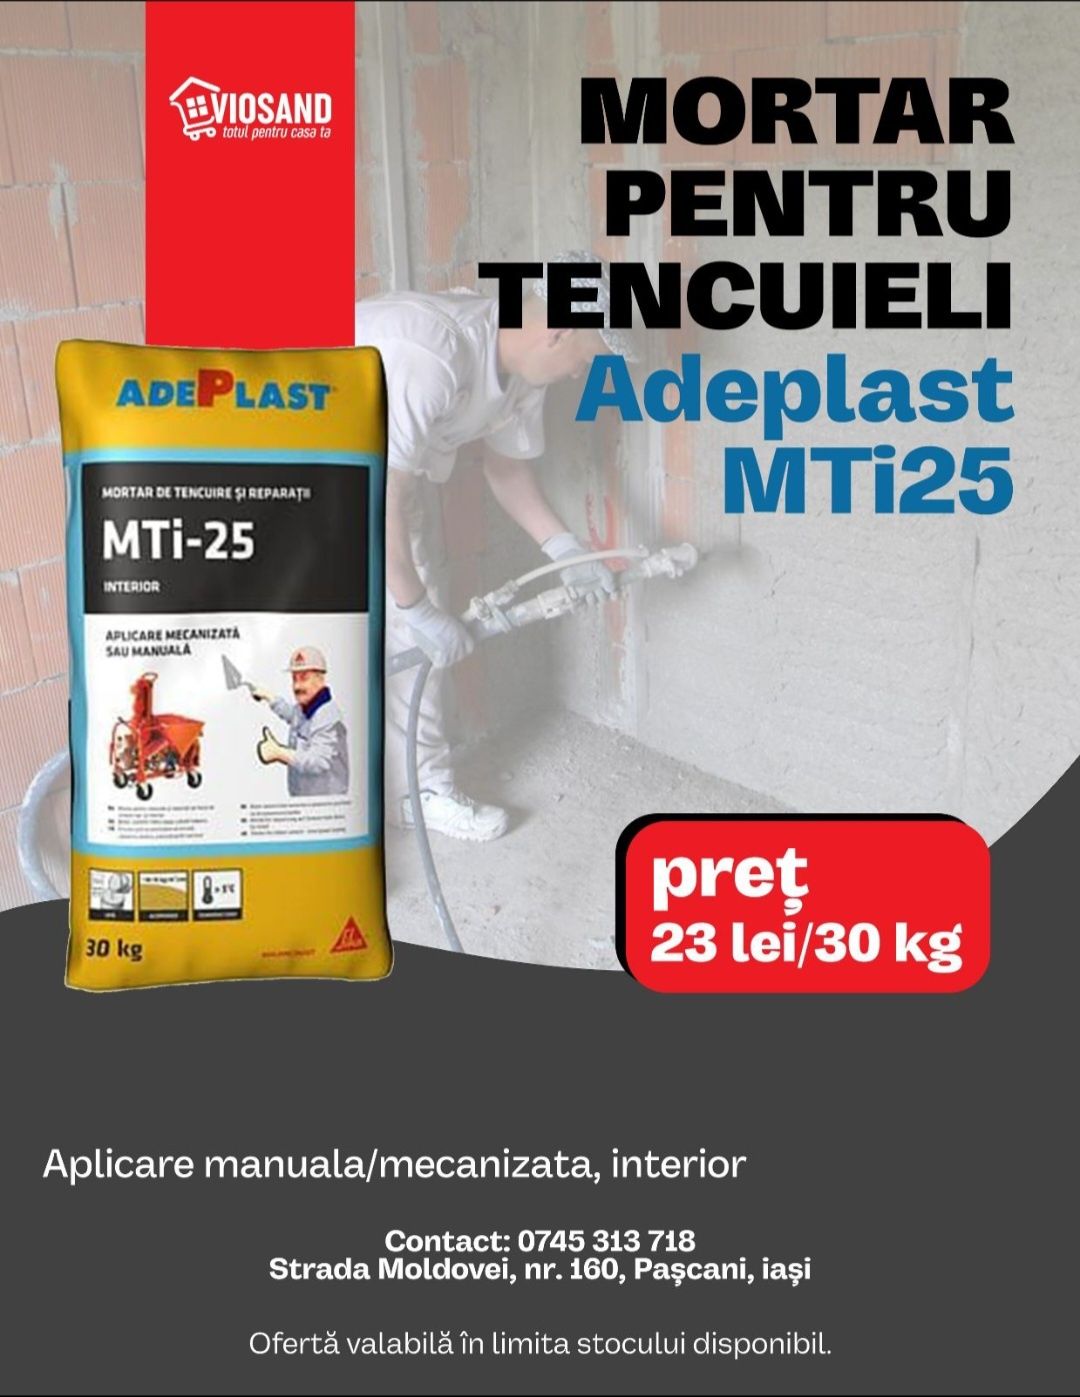 Tencuiala aplicare manuala / mecanizata Adeplast MTi-25, interior, 30